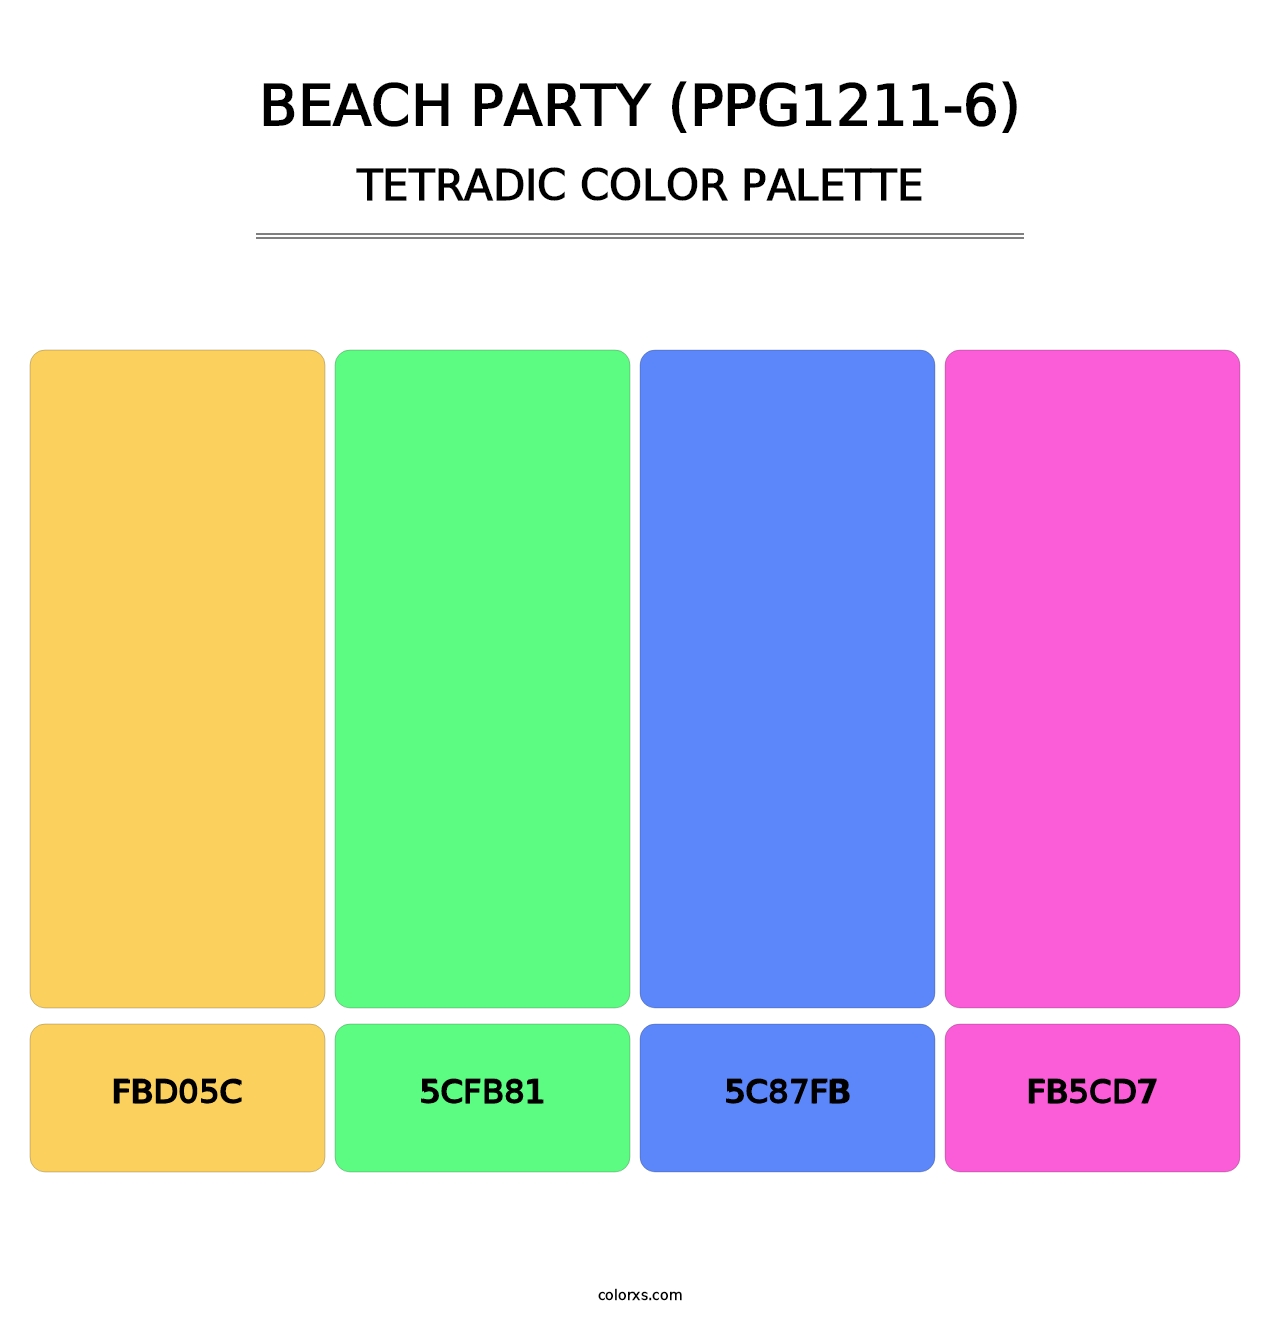 Beach Party (PPG1211-6) - Tetradic Color Palette